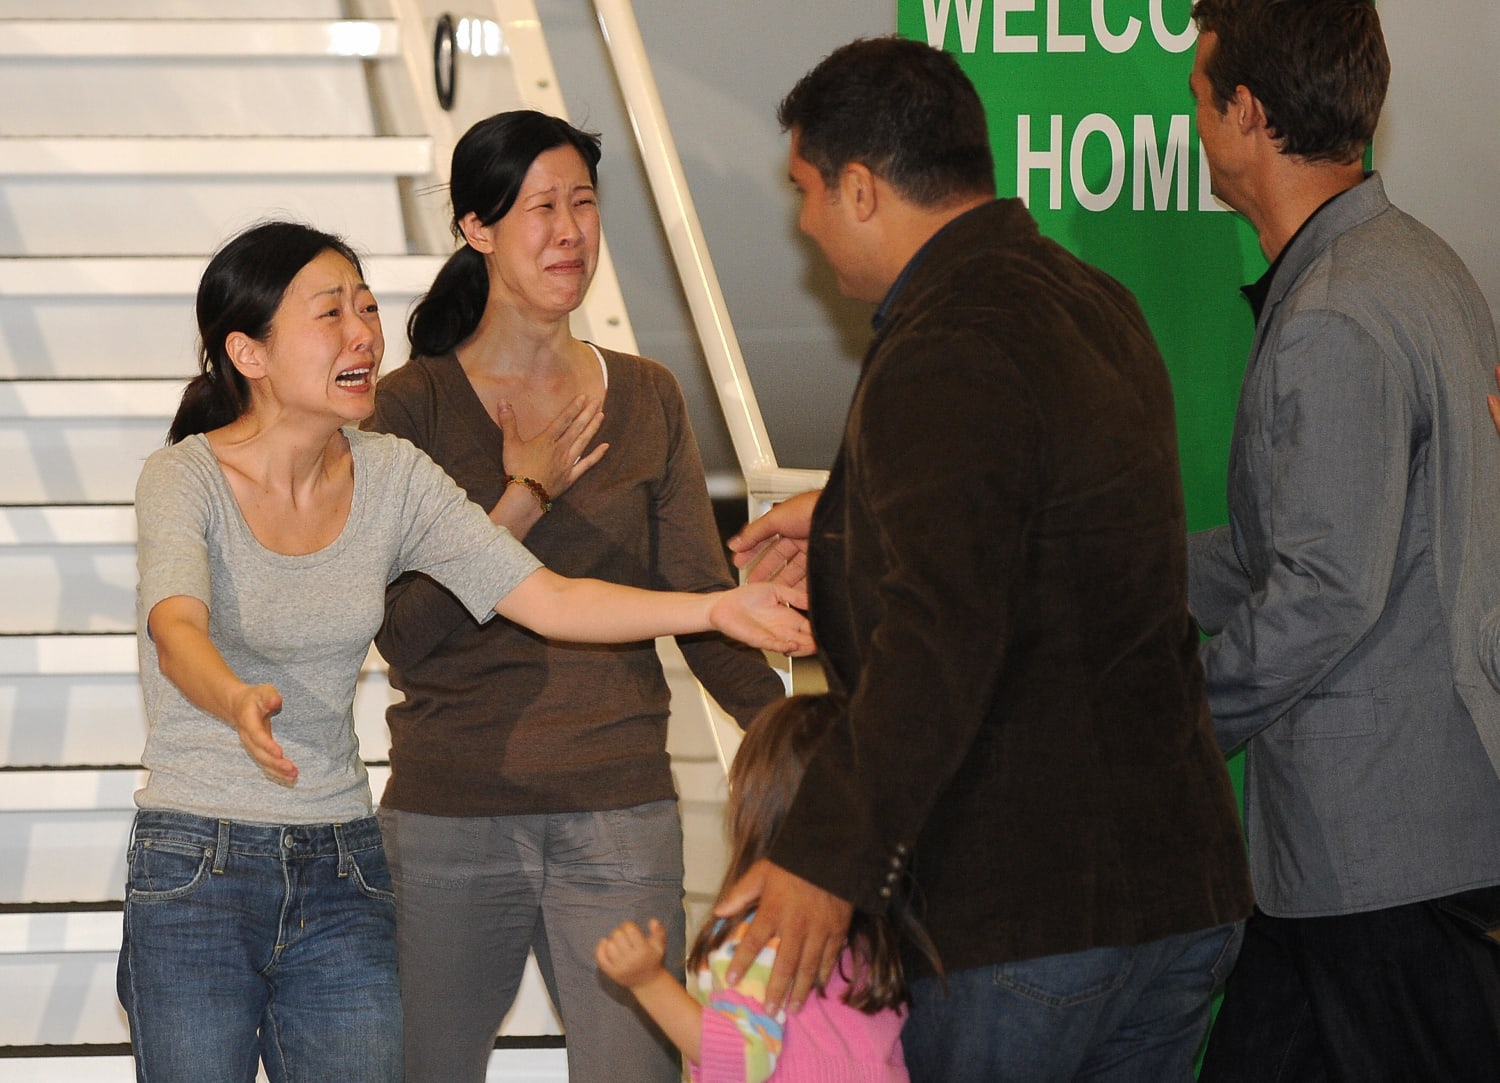 Freed journalists Laura Ling, Euna Lee call captivity in N. Korea